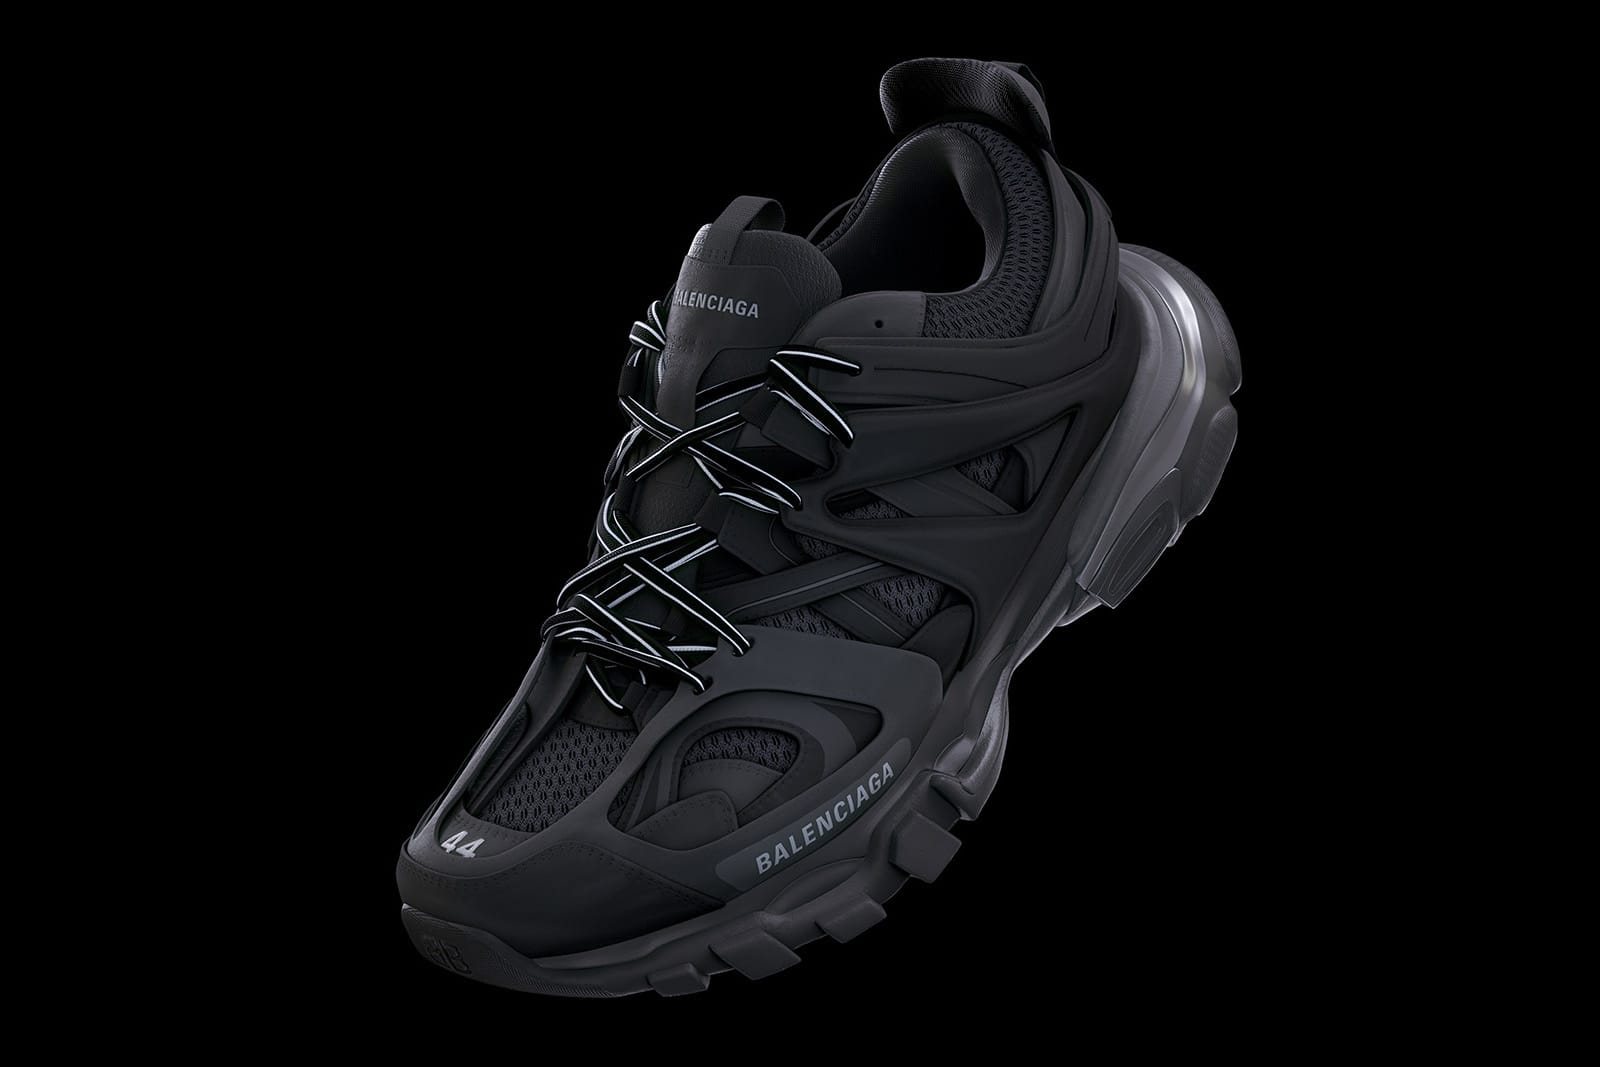 Balenciaga Track 2 0 Sneakers in Black for Men Lyst